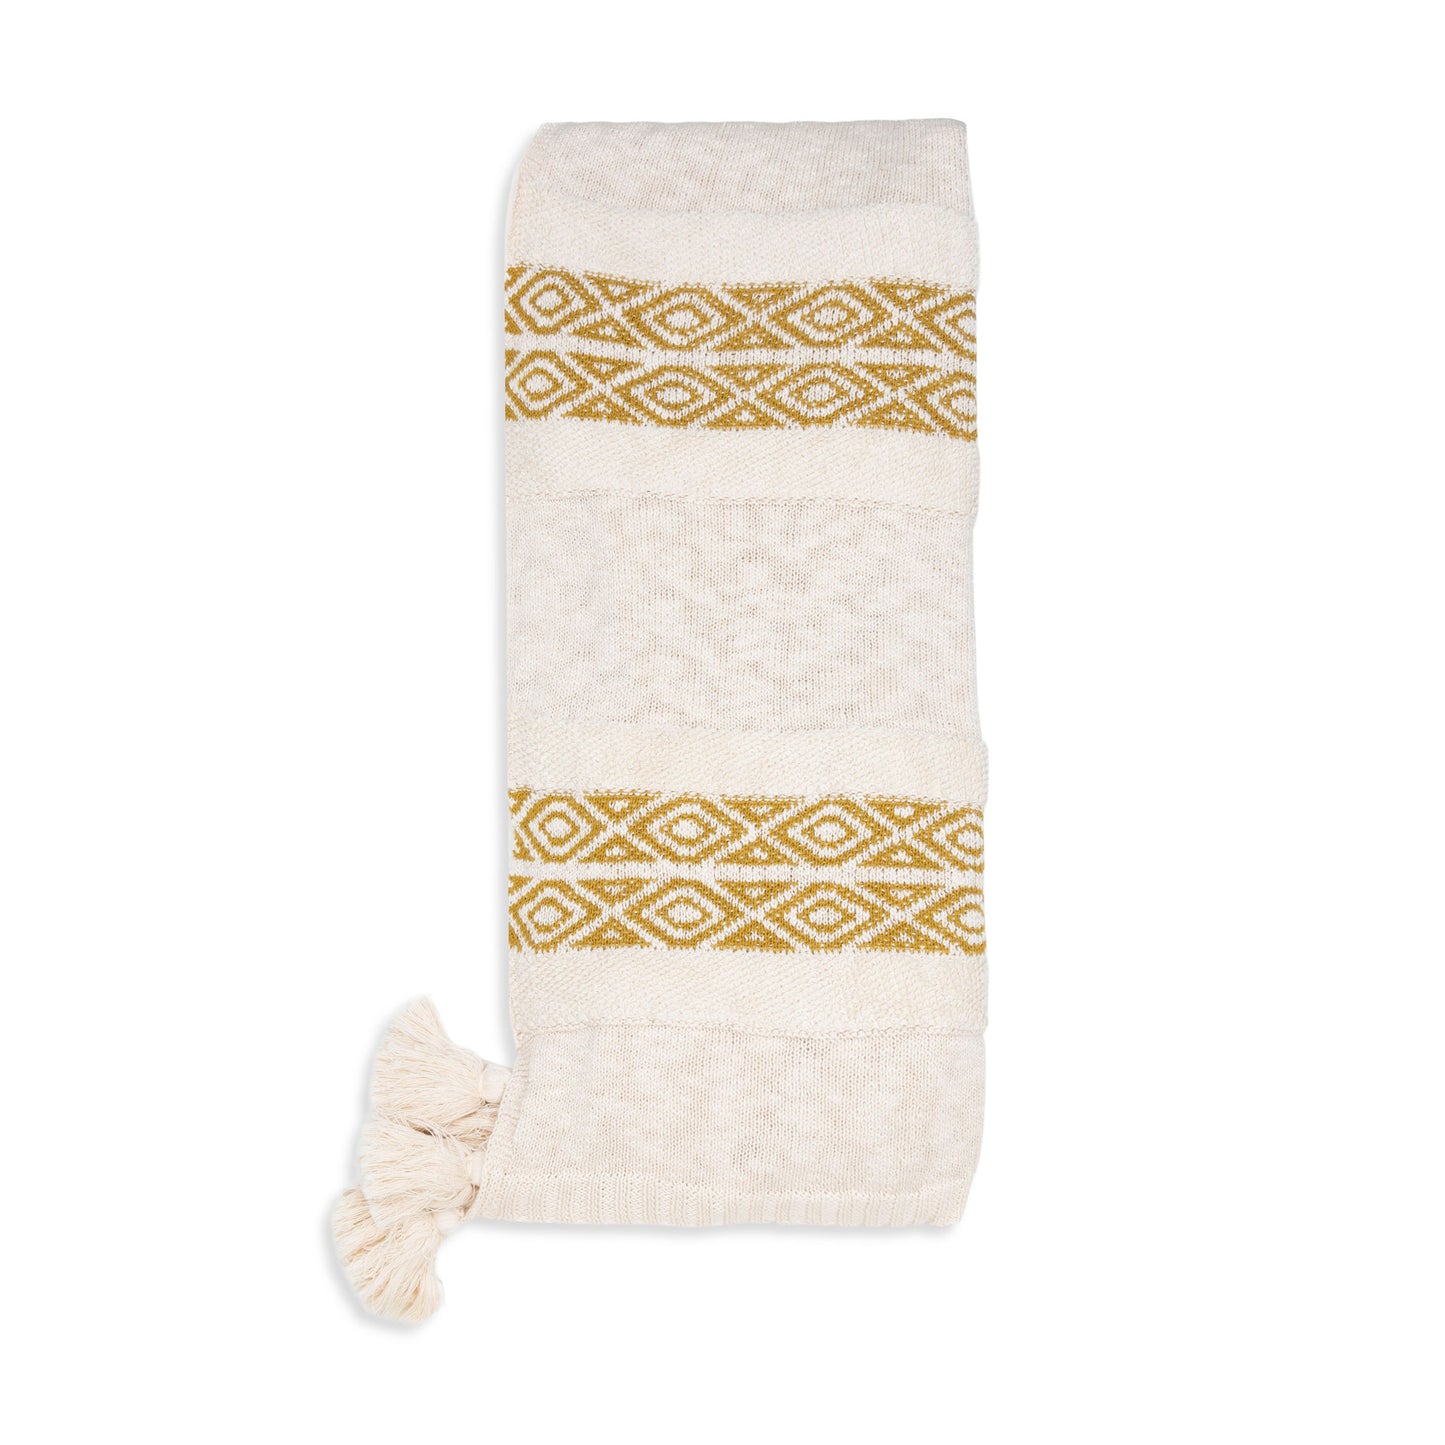 Necalli 50x60" Striped Cotton Decorative Knit Throw Blanket